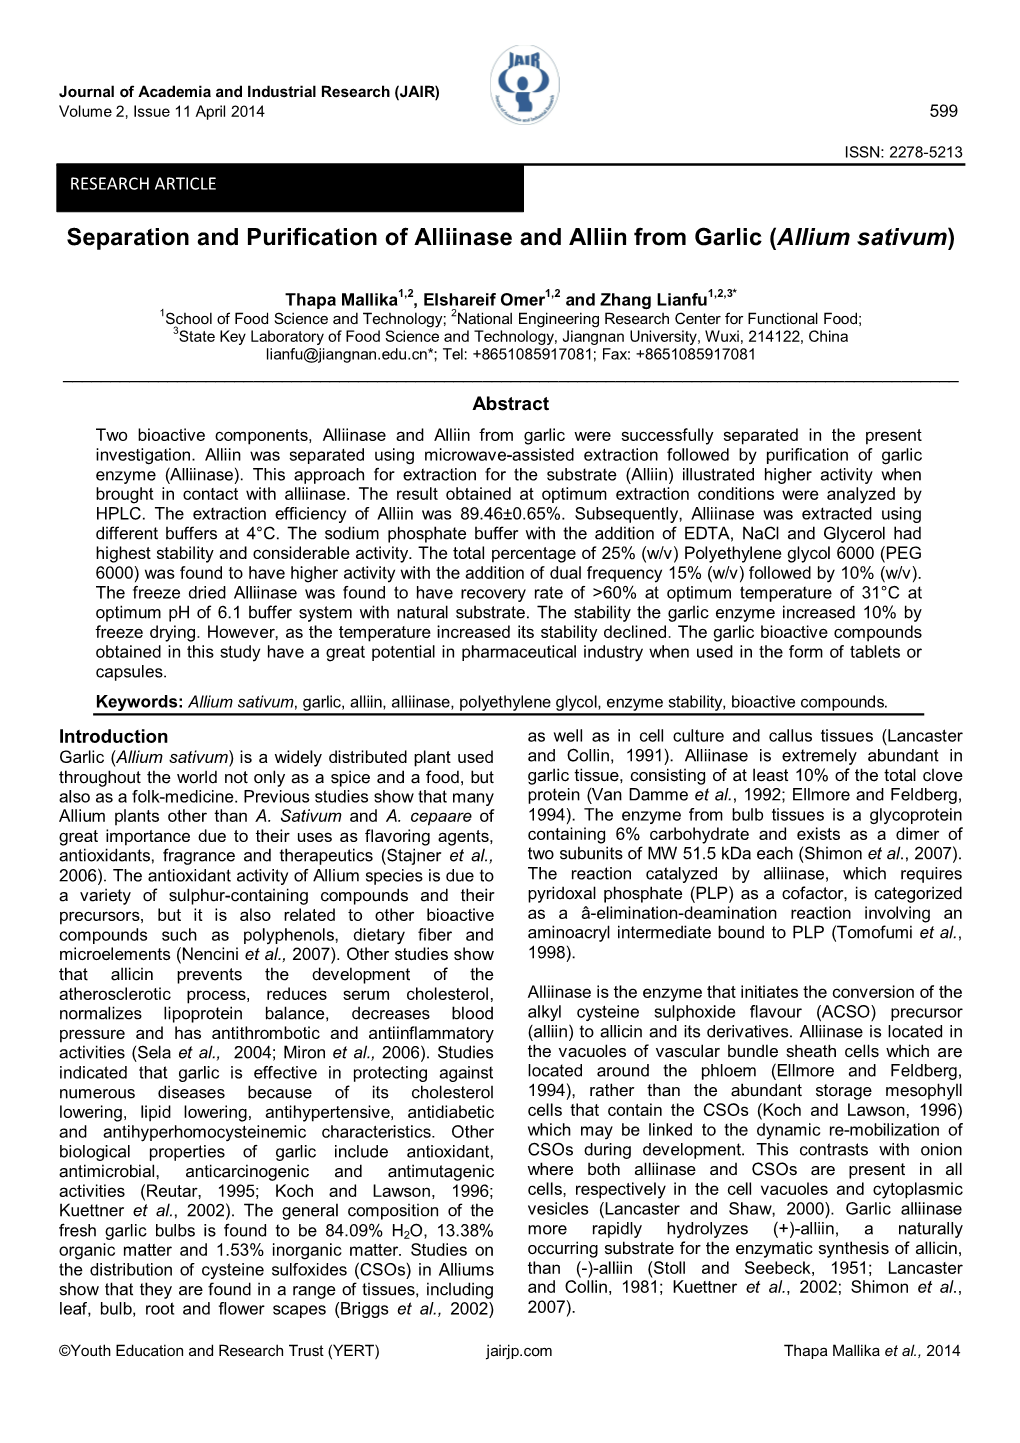 Separation and Purification of Alliinase and Alliin from Garlic (Allium Sativum)